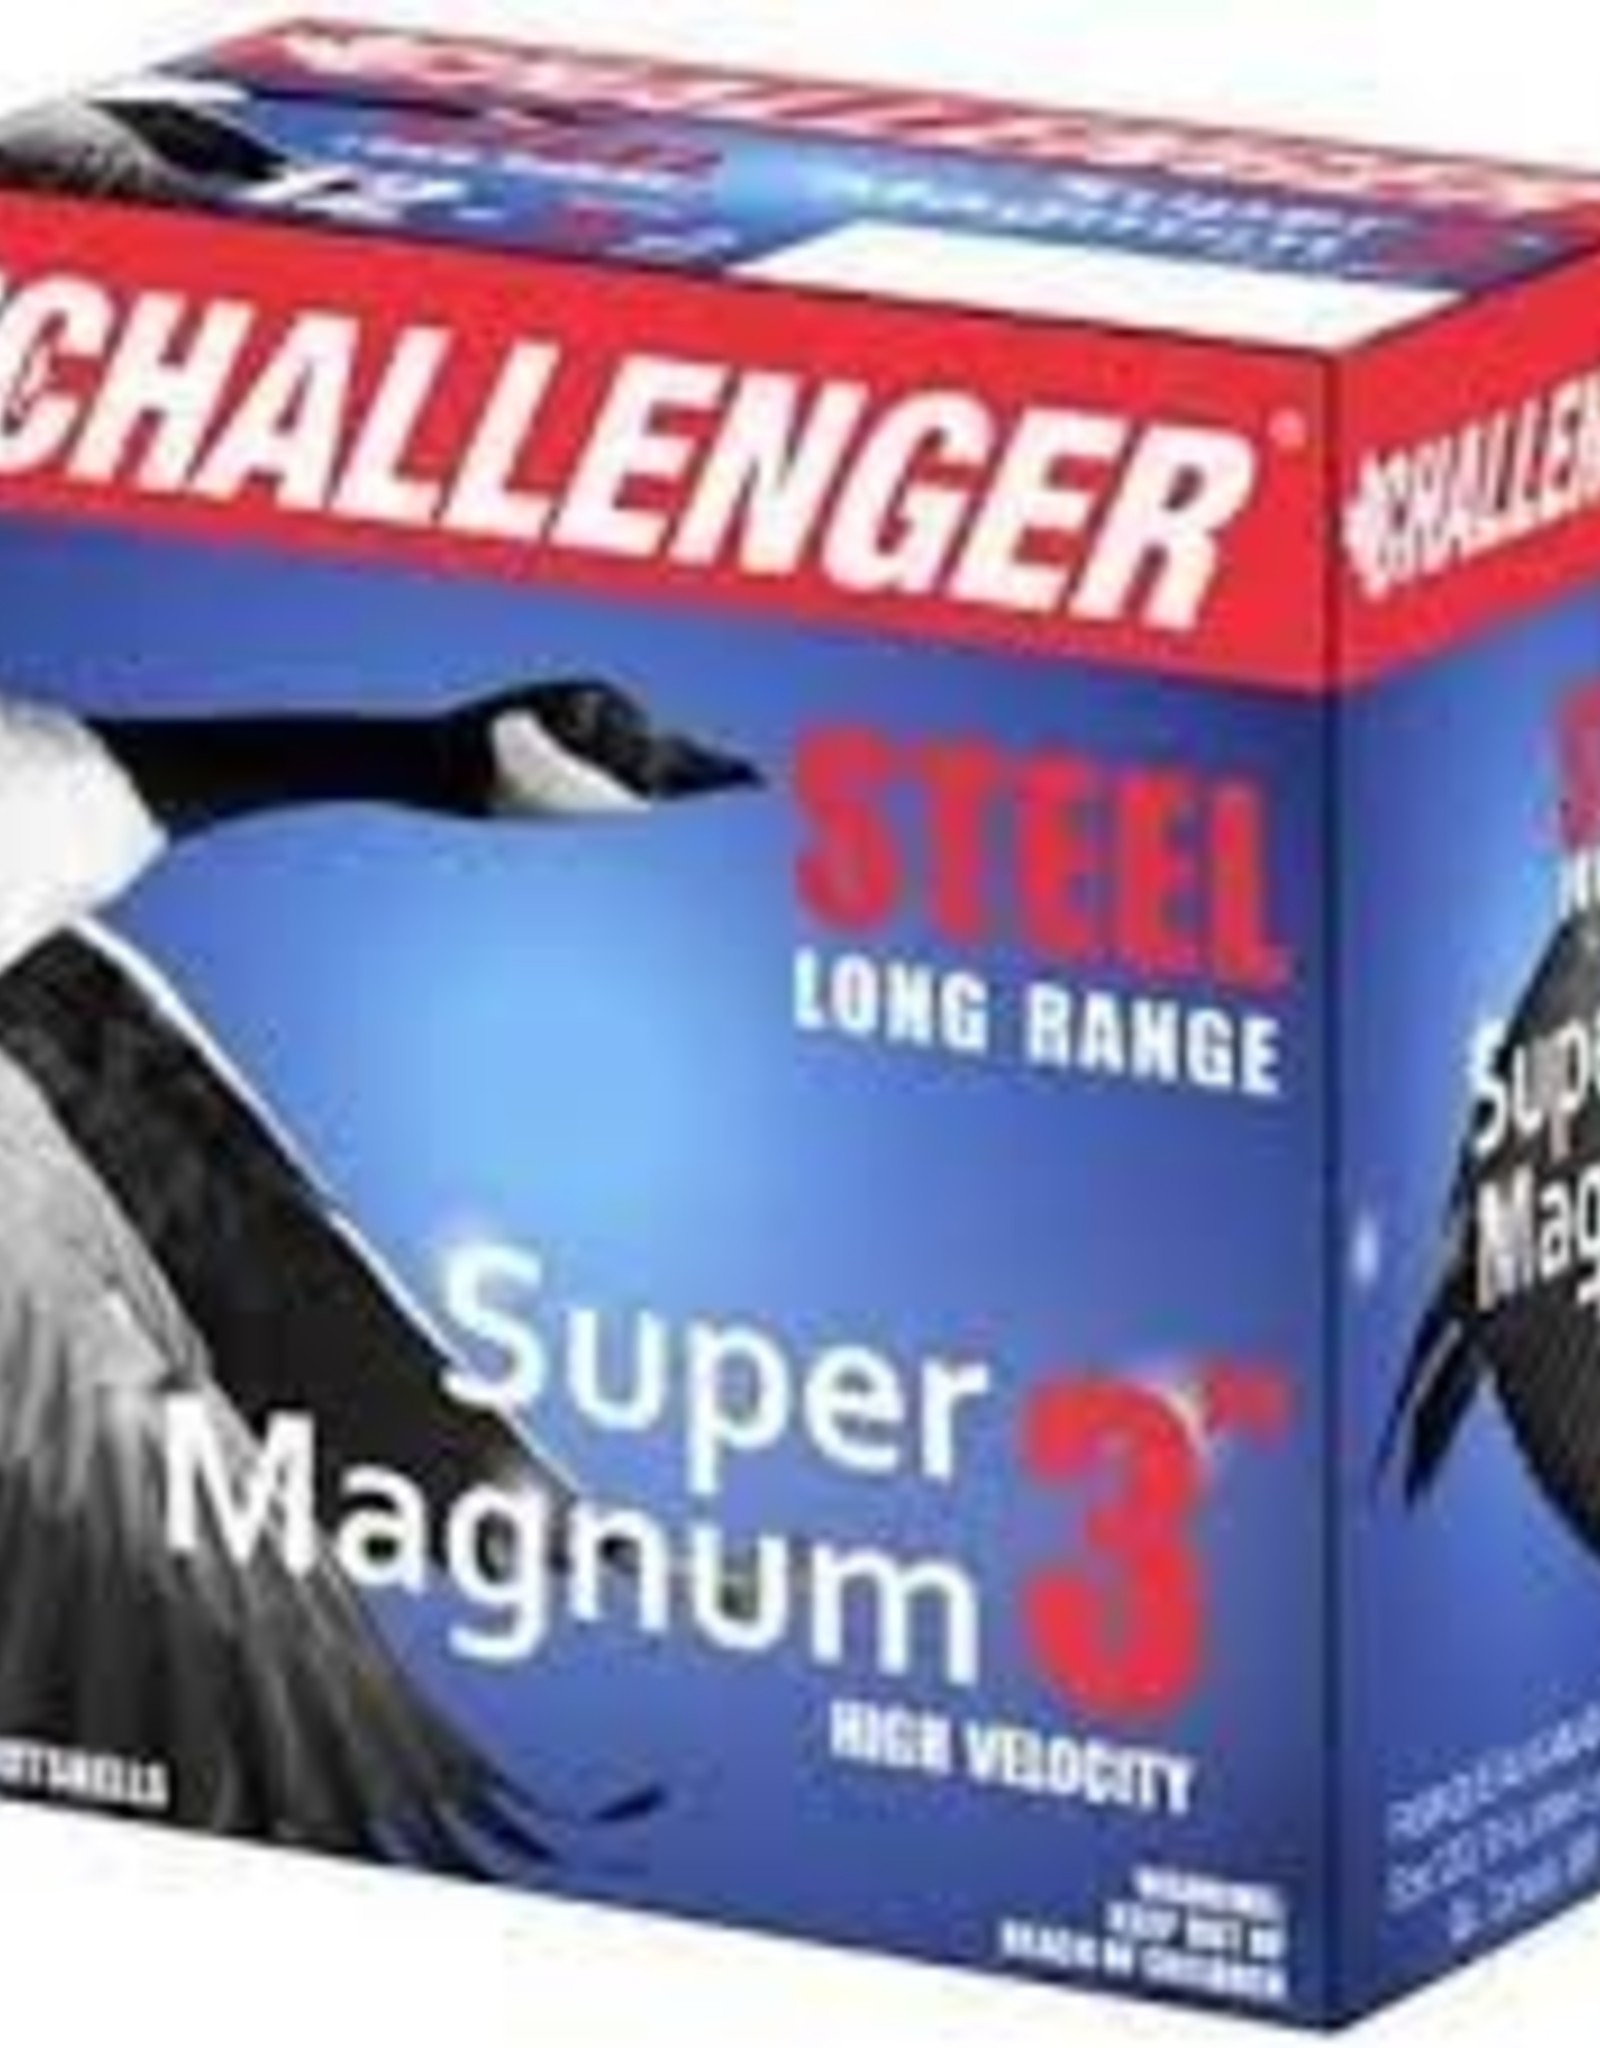 Challenger 12 GA 3" #2 1 3/8 Oz Super Magnum